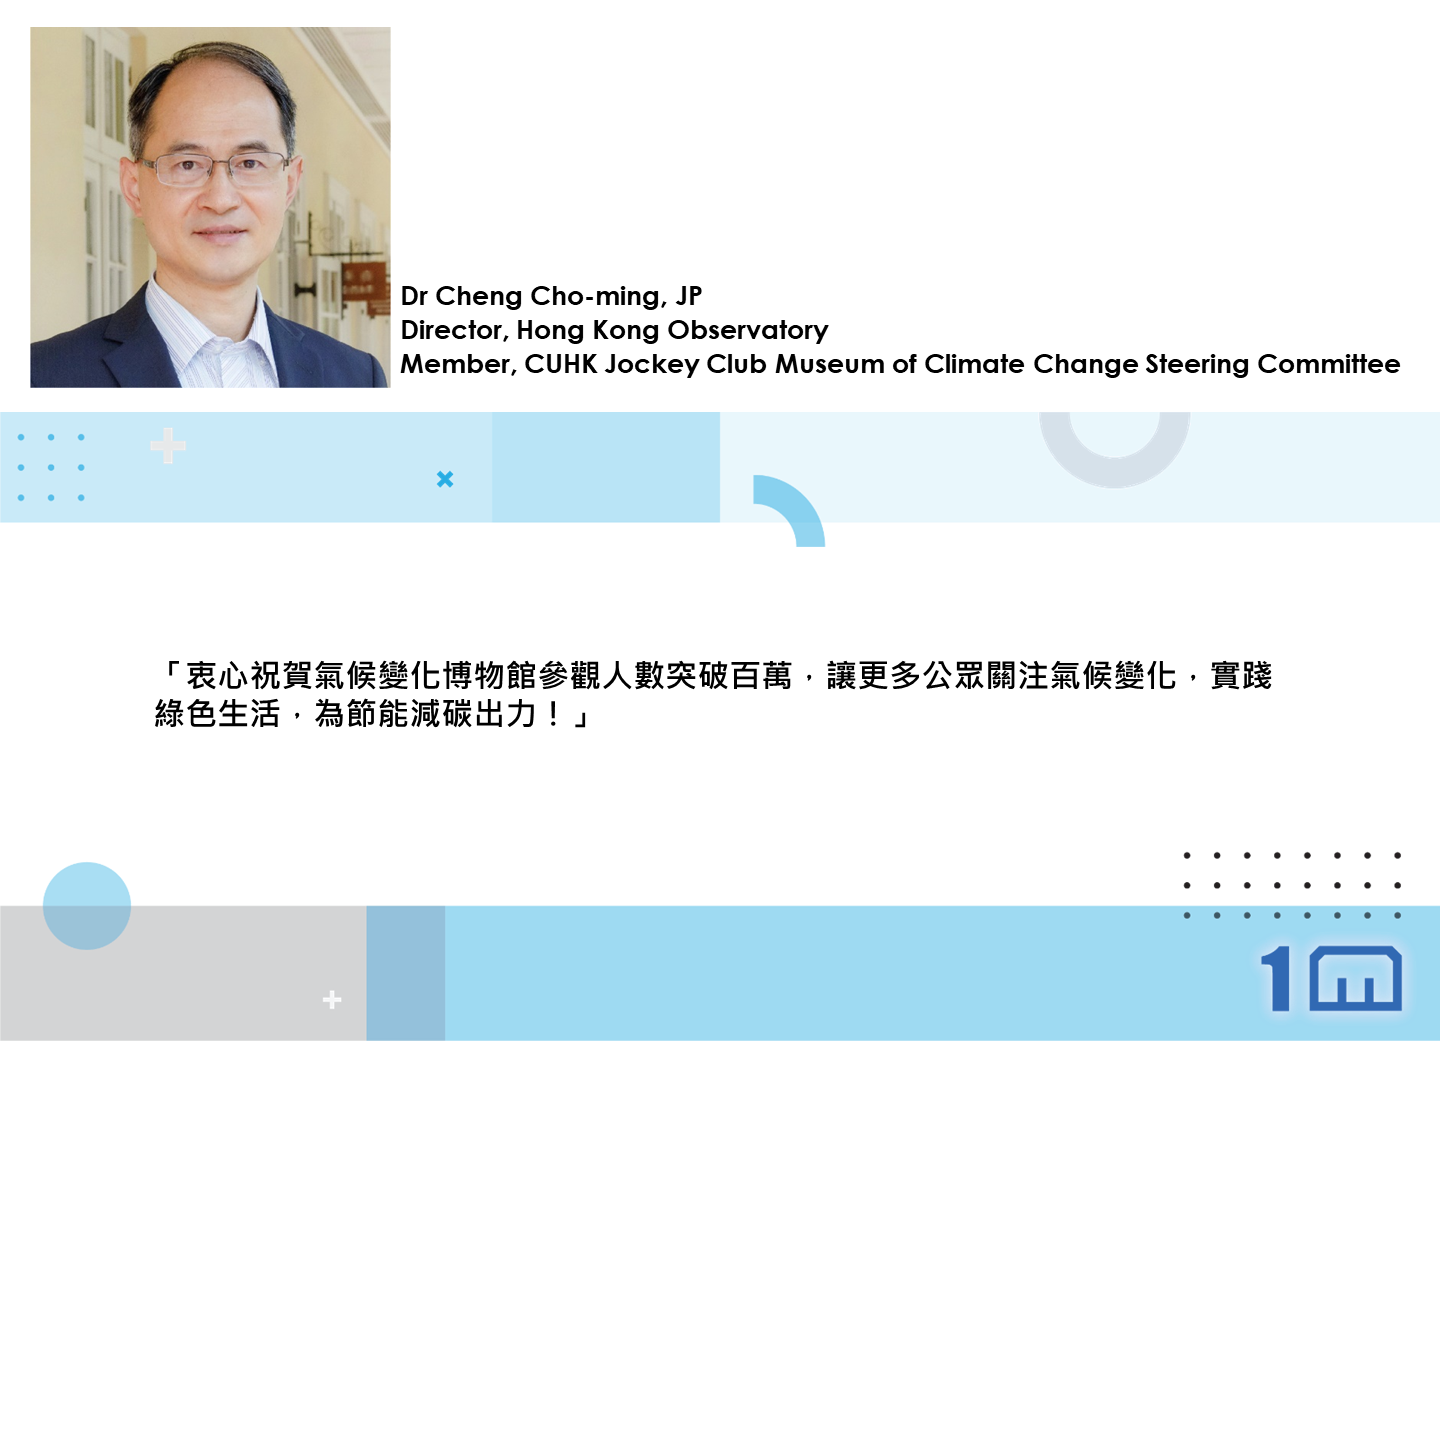 5. Dr Cheng Cho ming en